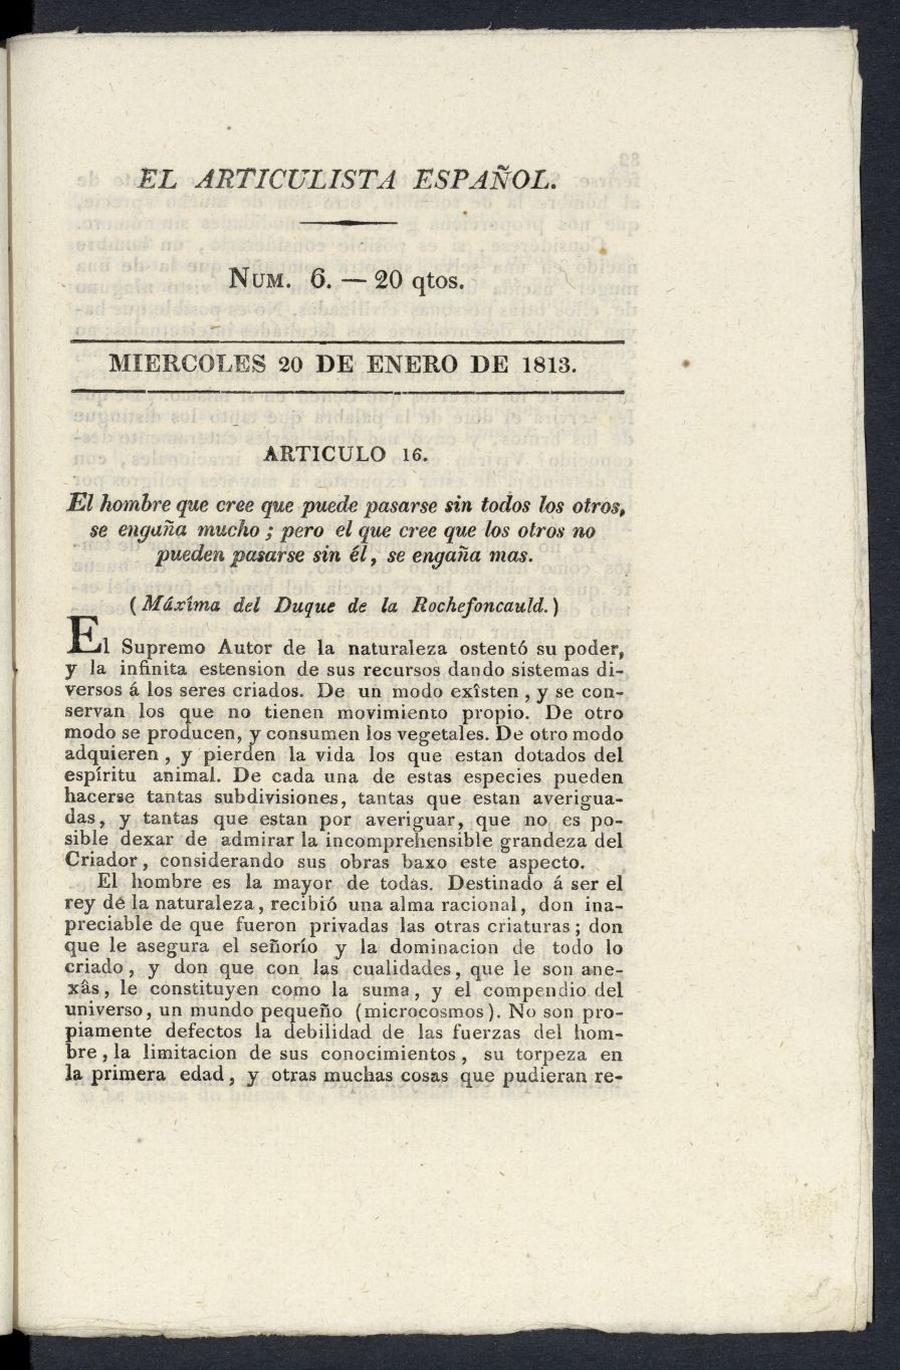 El Articulista Espaol, mircoles 20 de enero de 1813